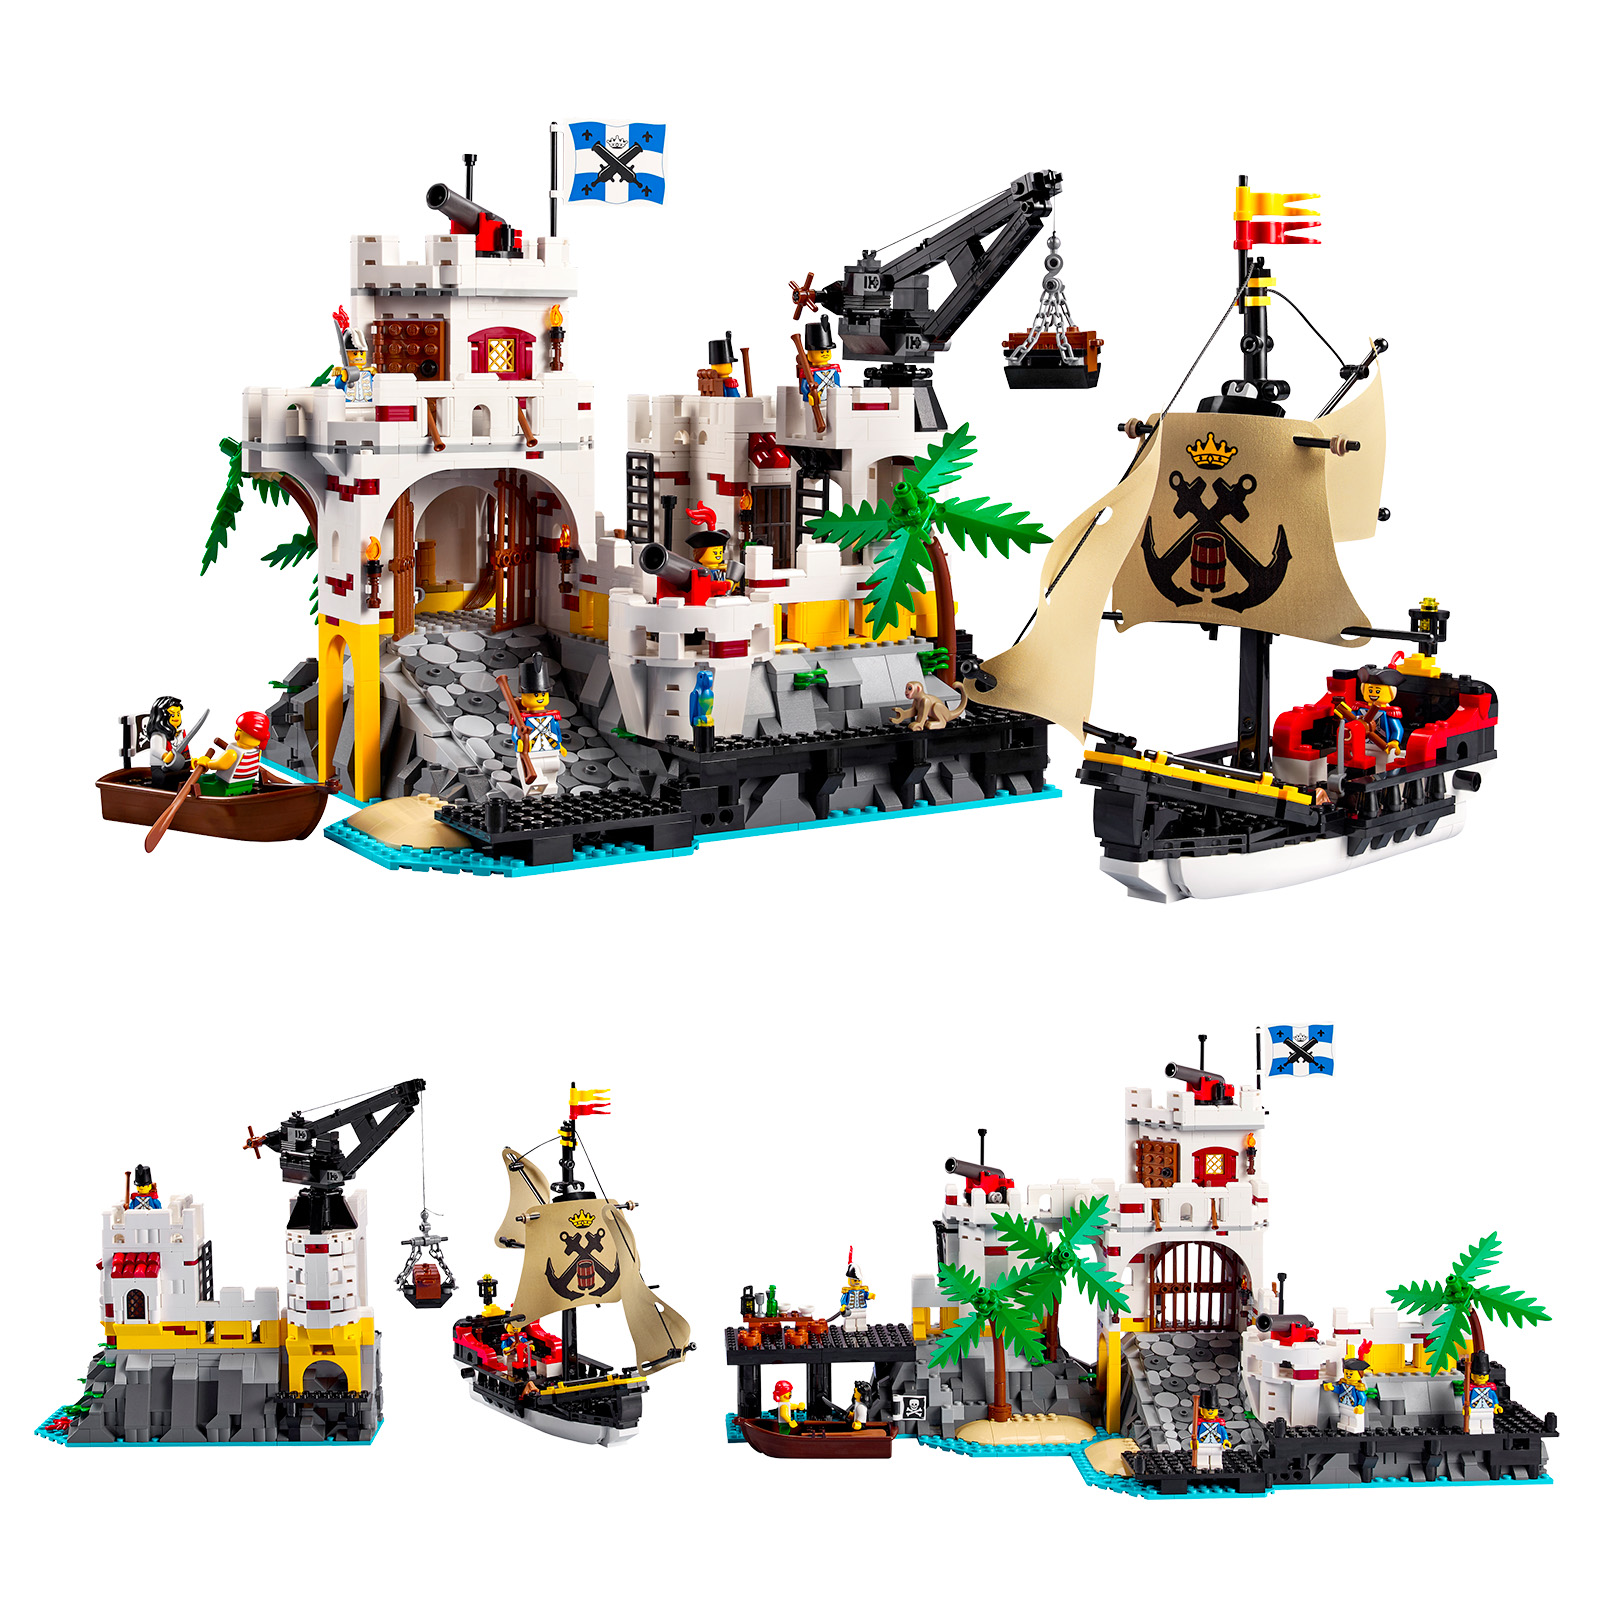 ▻ On the LEGO Shop: the ICONS 10320 Eldorado Fortress set is